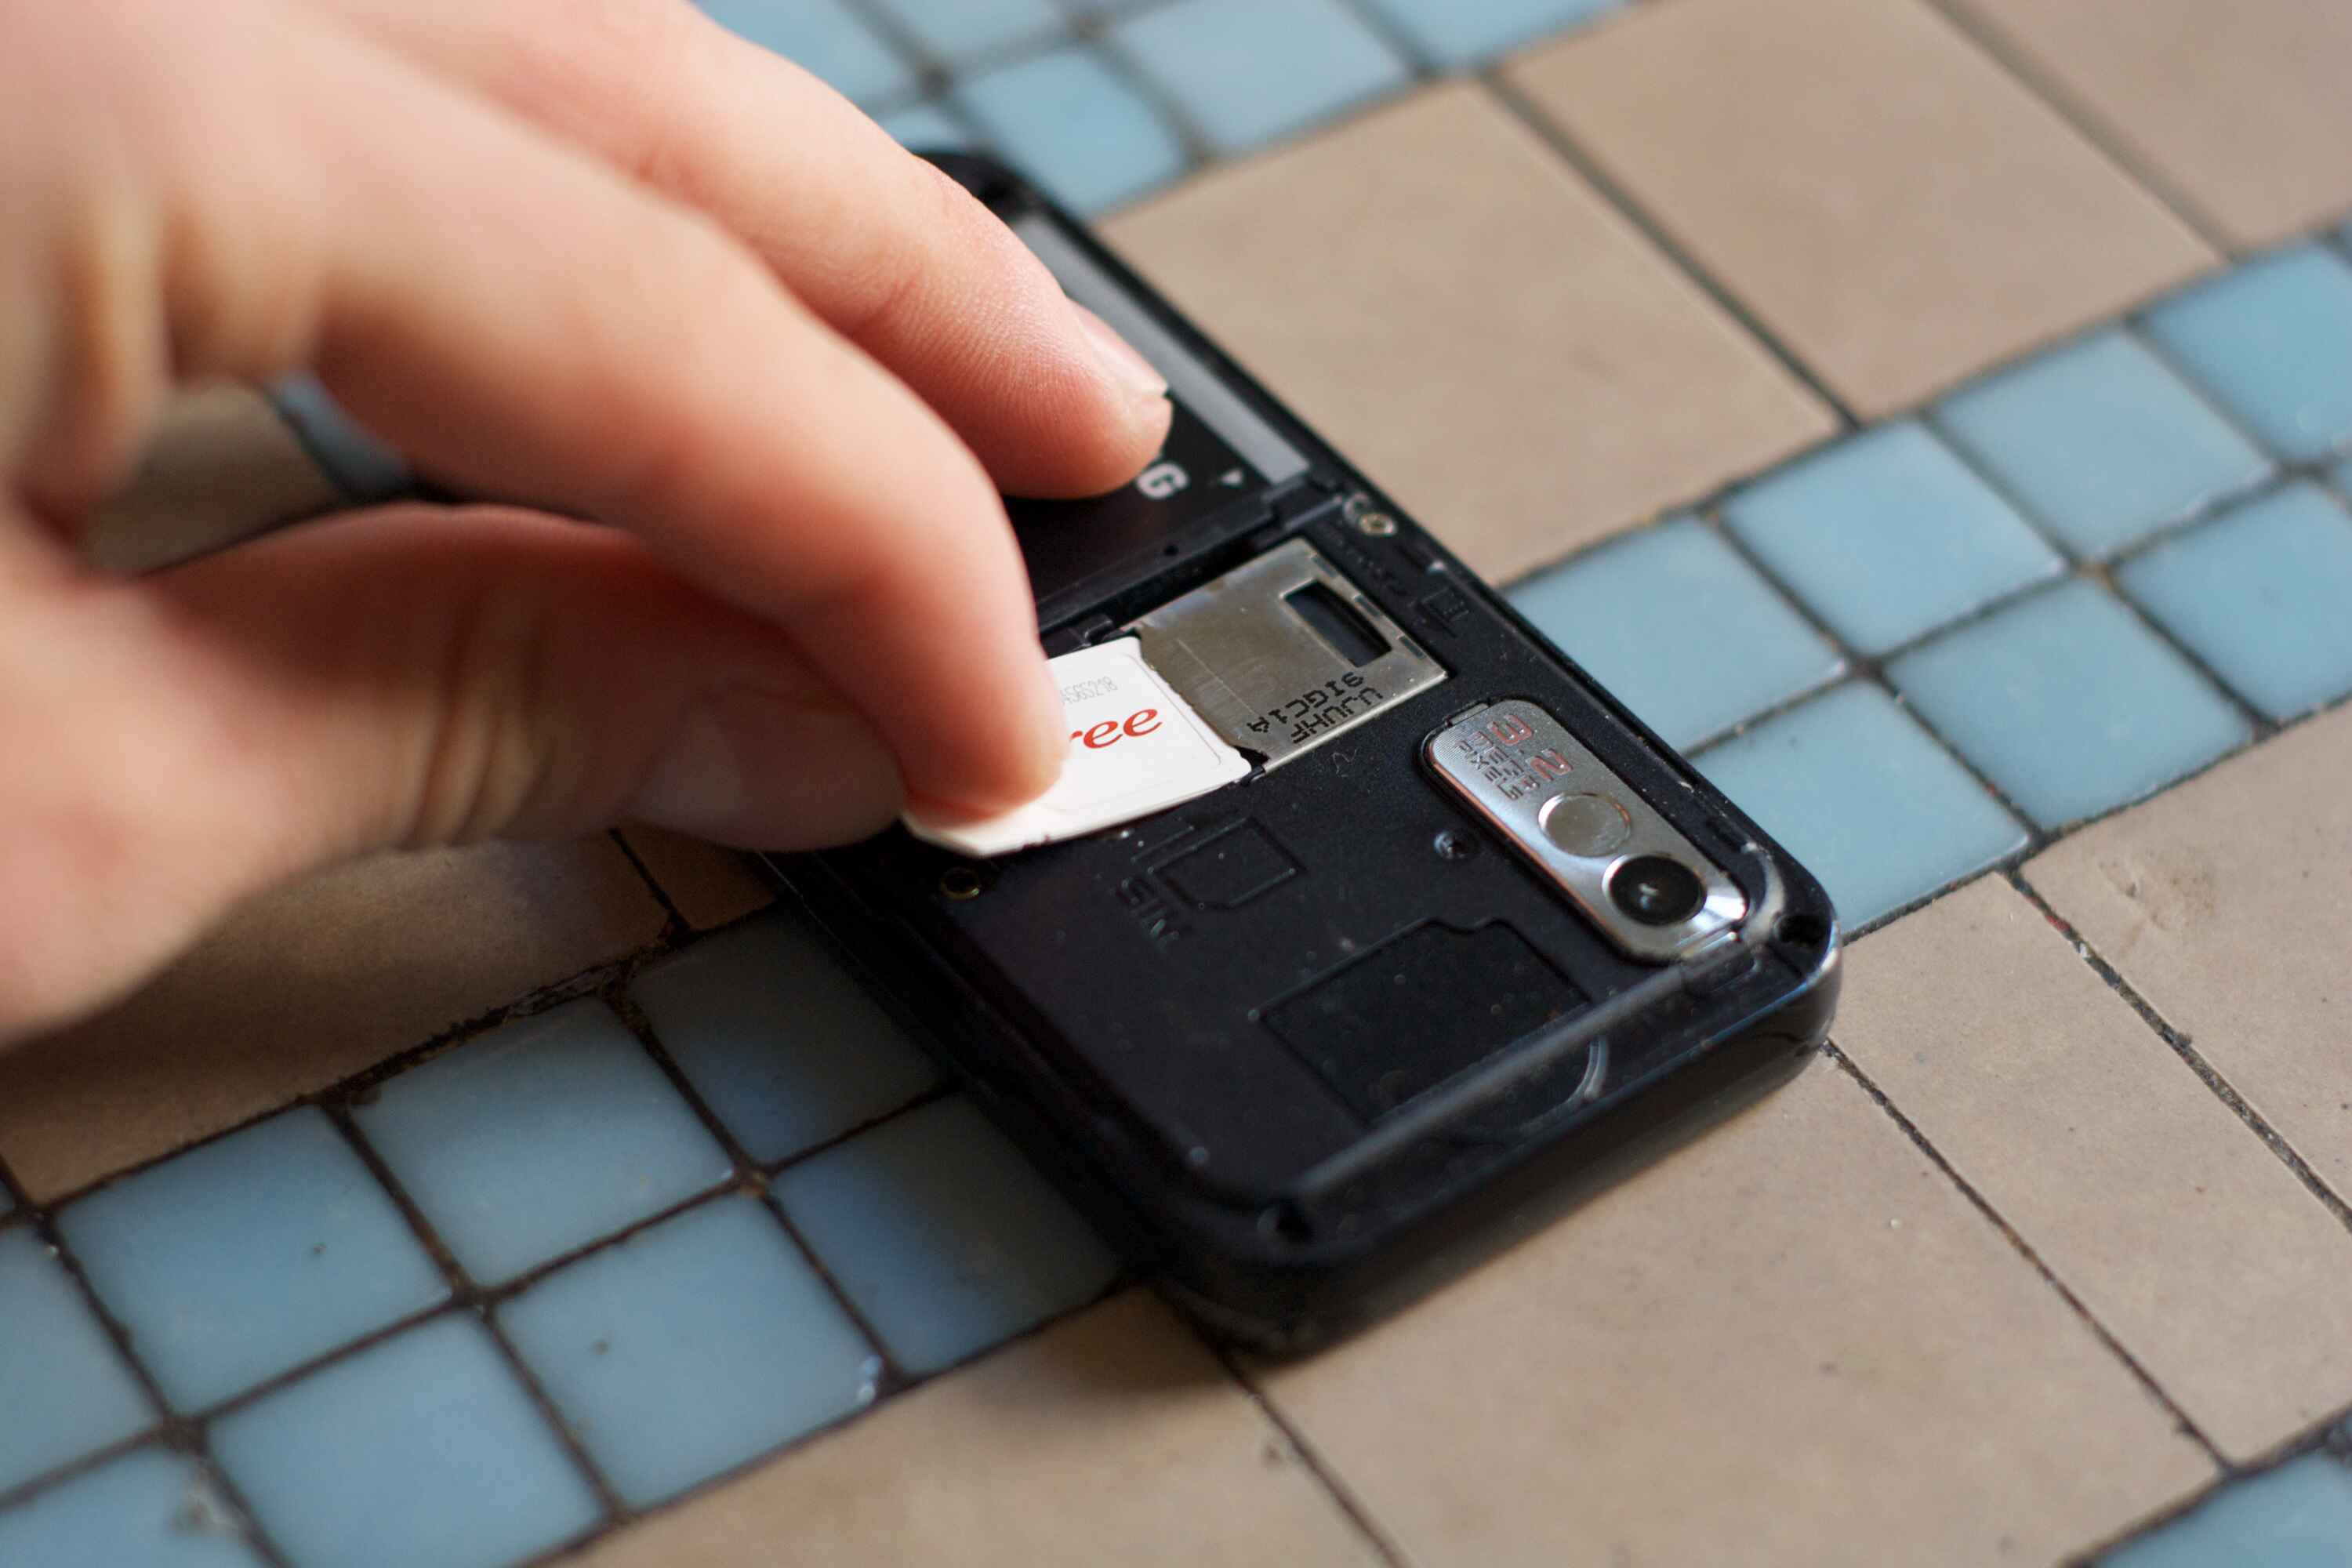 Transferring Photos To Samsung SIM Card: Easy Steps